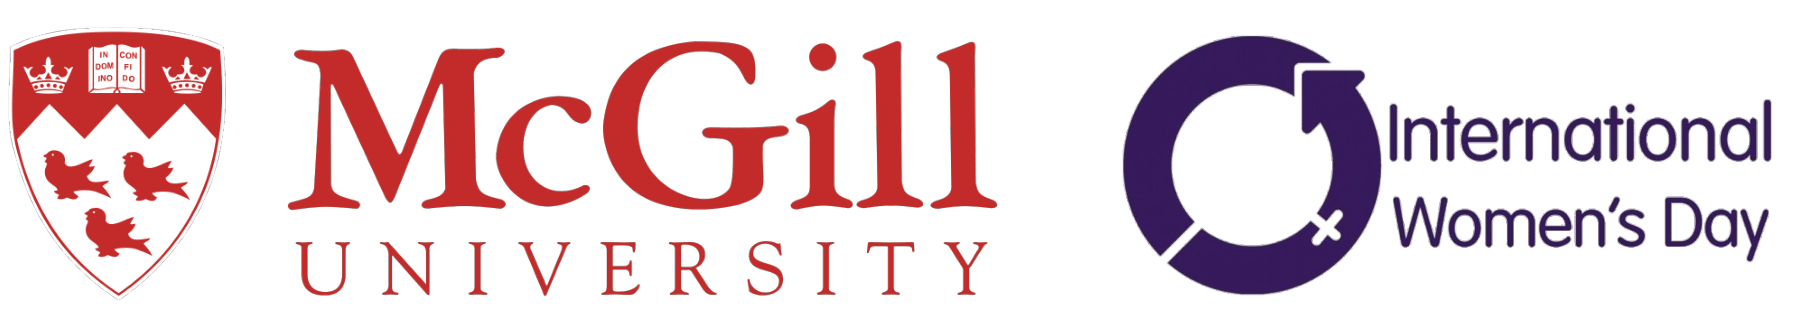 logos for McGill University and International Women's Day